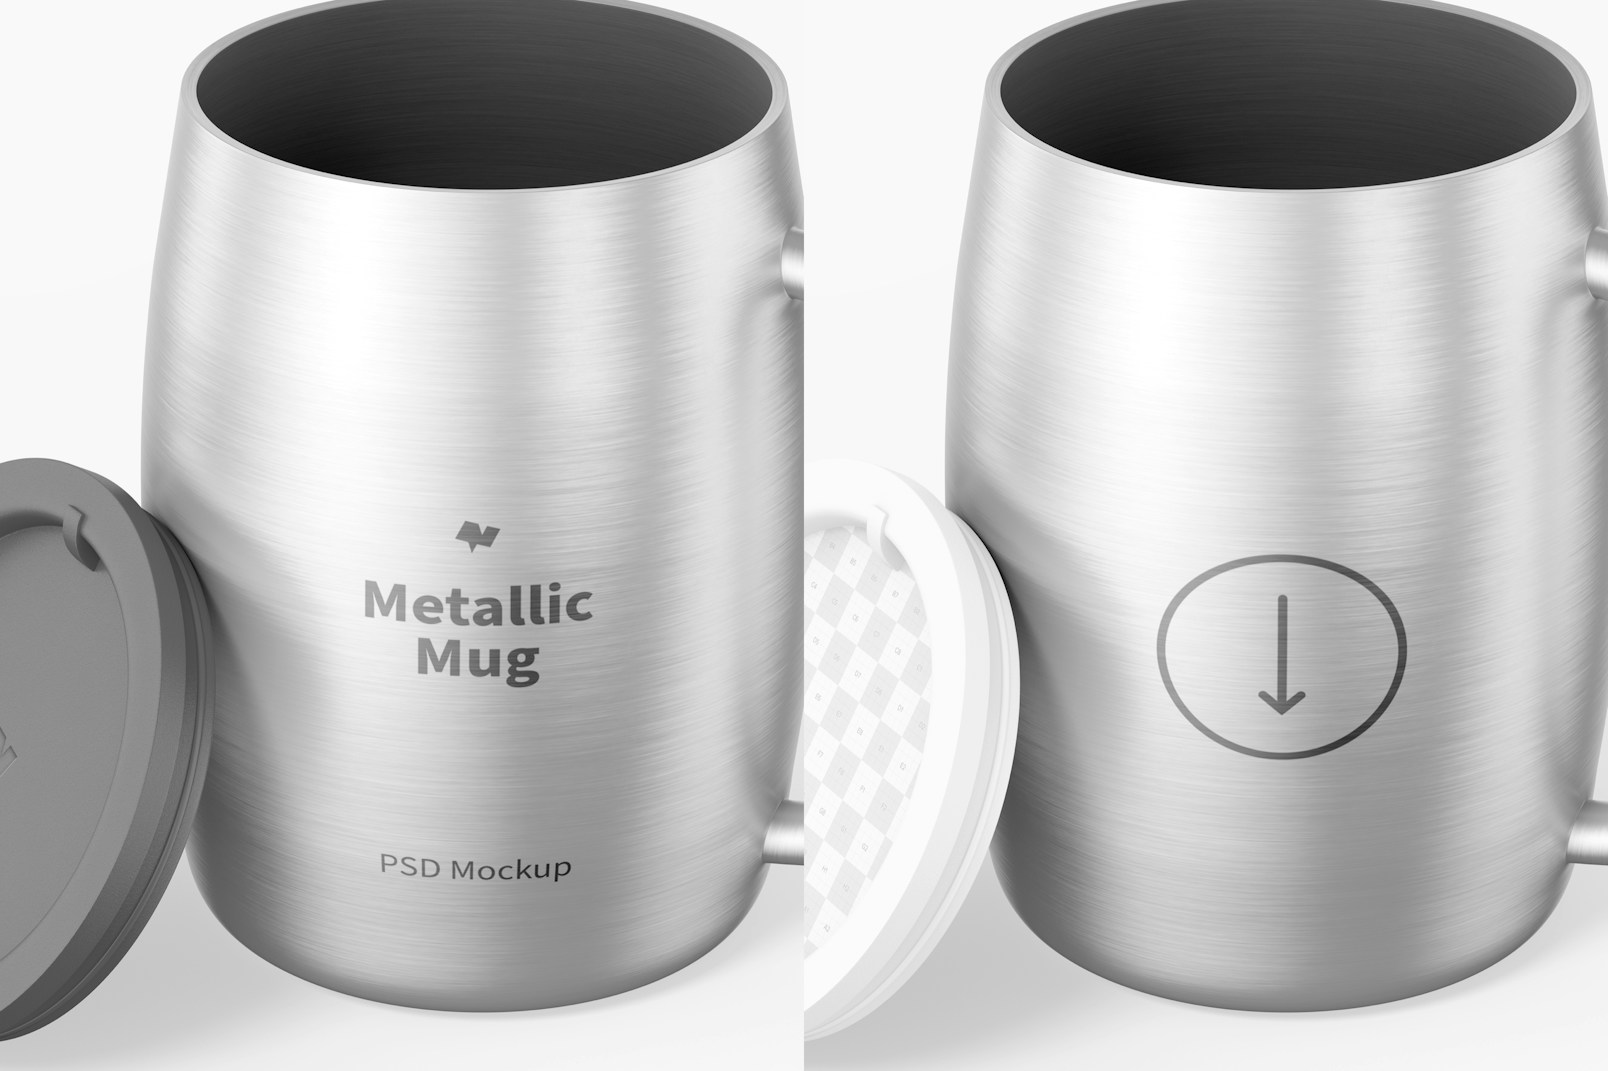 Metallic Mug with Lid Mockup, Close Up